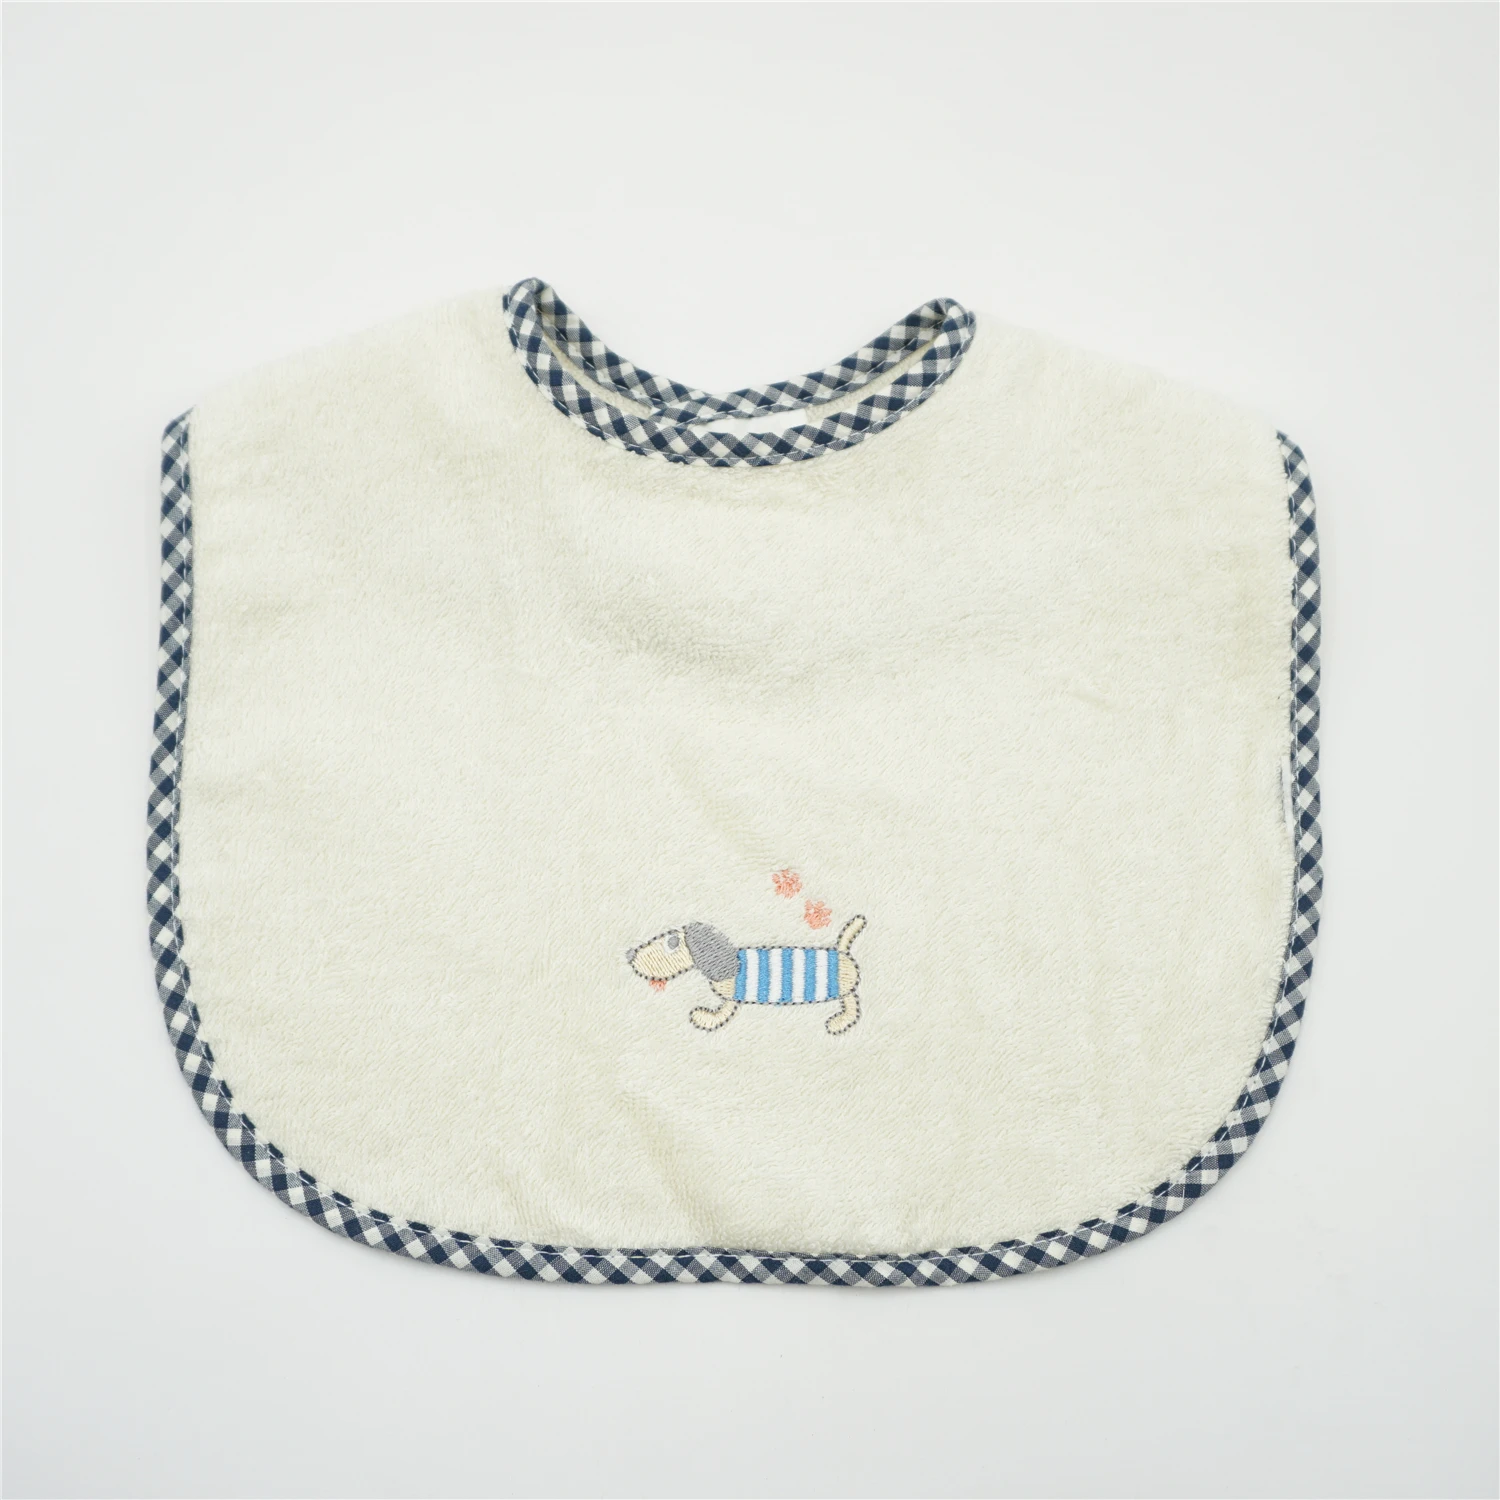 2 Pcs Baby Bibs Cotton Kids Newborn Infant Saliva Towel Terry Cloth Japanese Style 30*20 High Quality Free Shipping